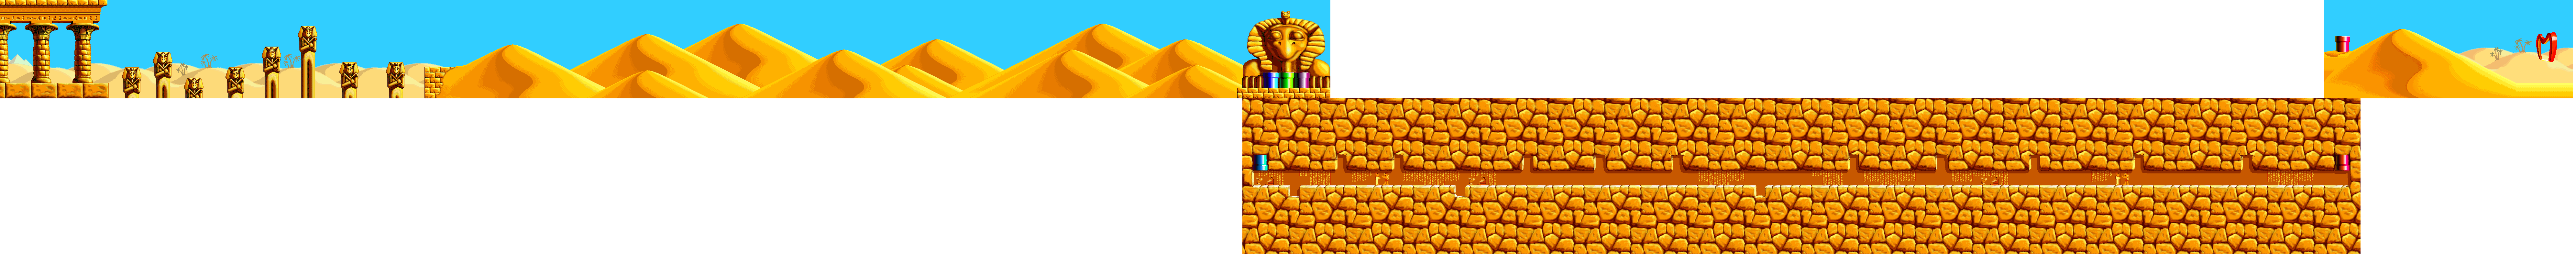 Super Mario's Wacky Worlds (Prototype) - Egypt Stage